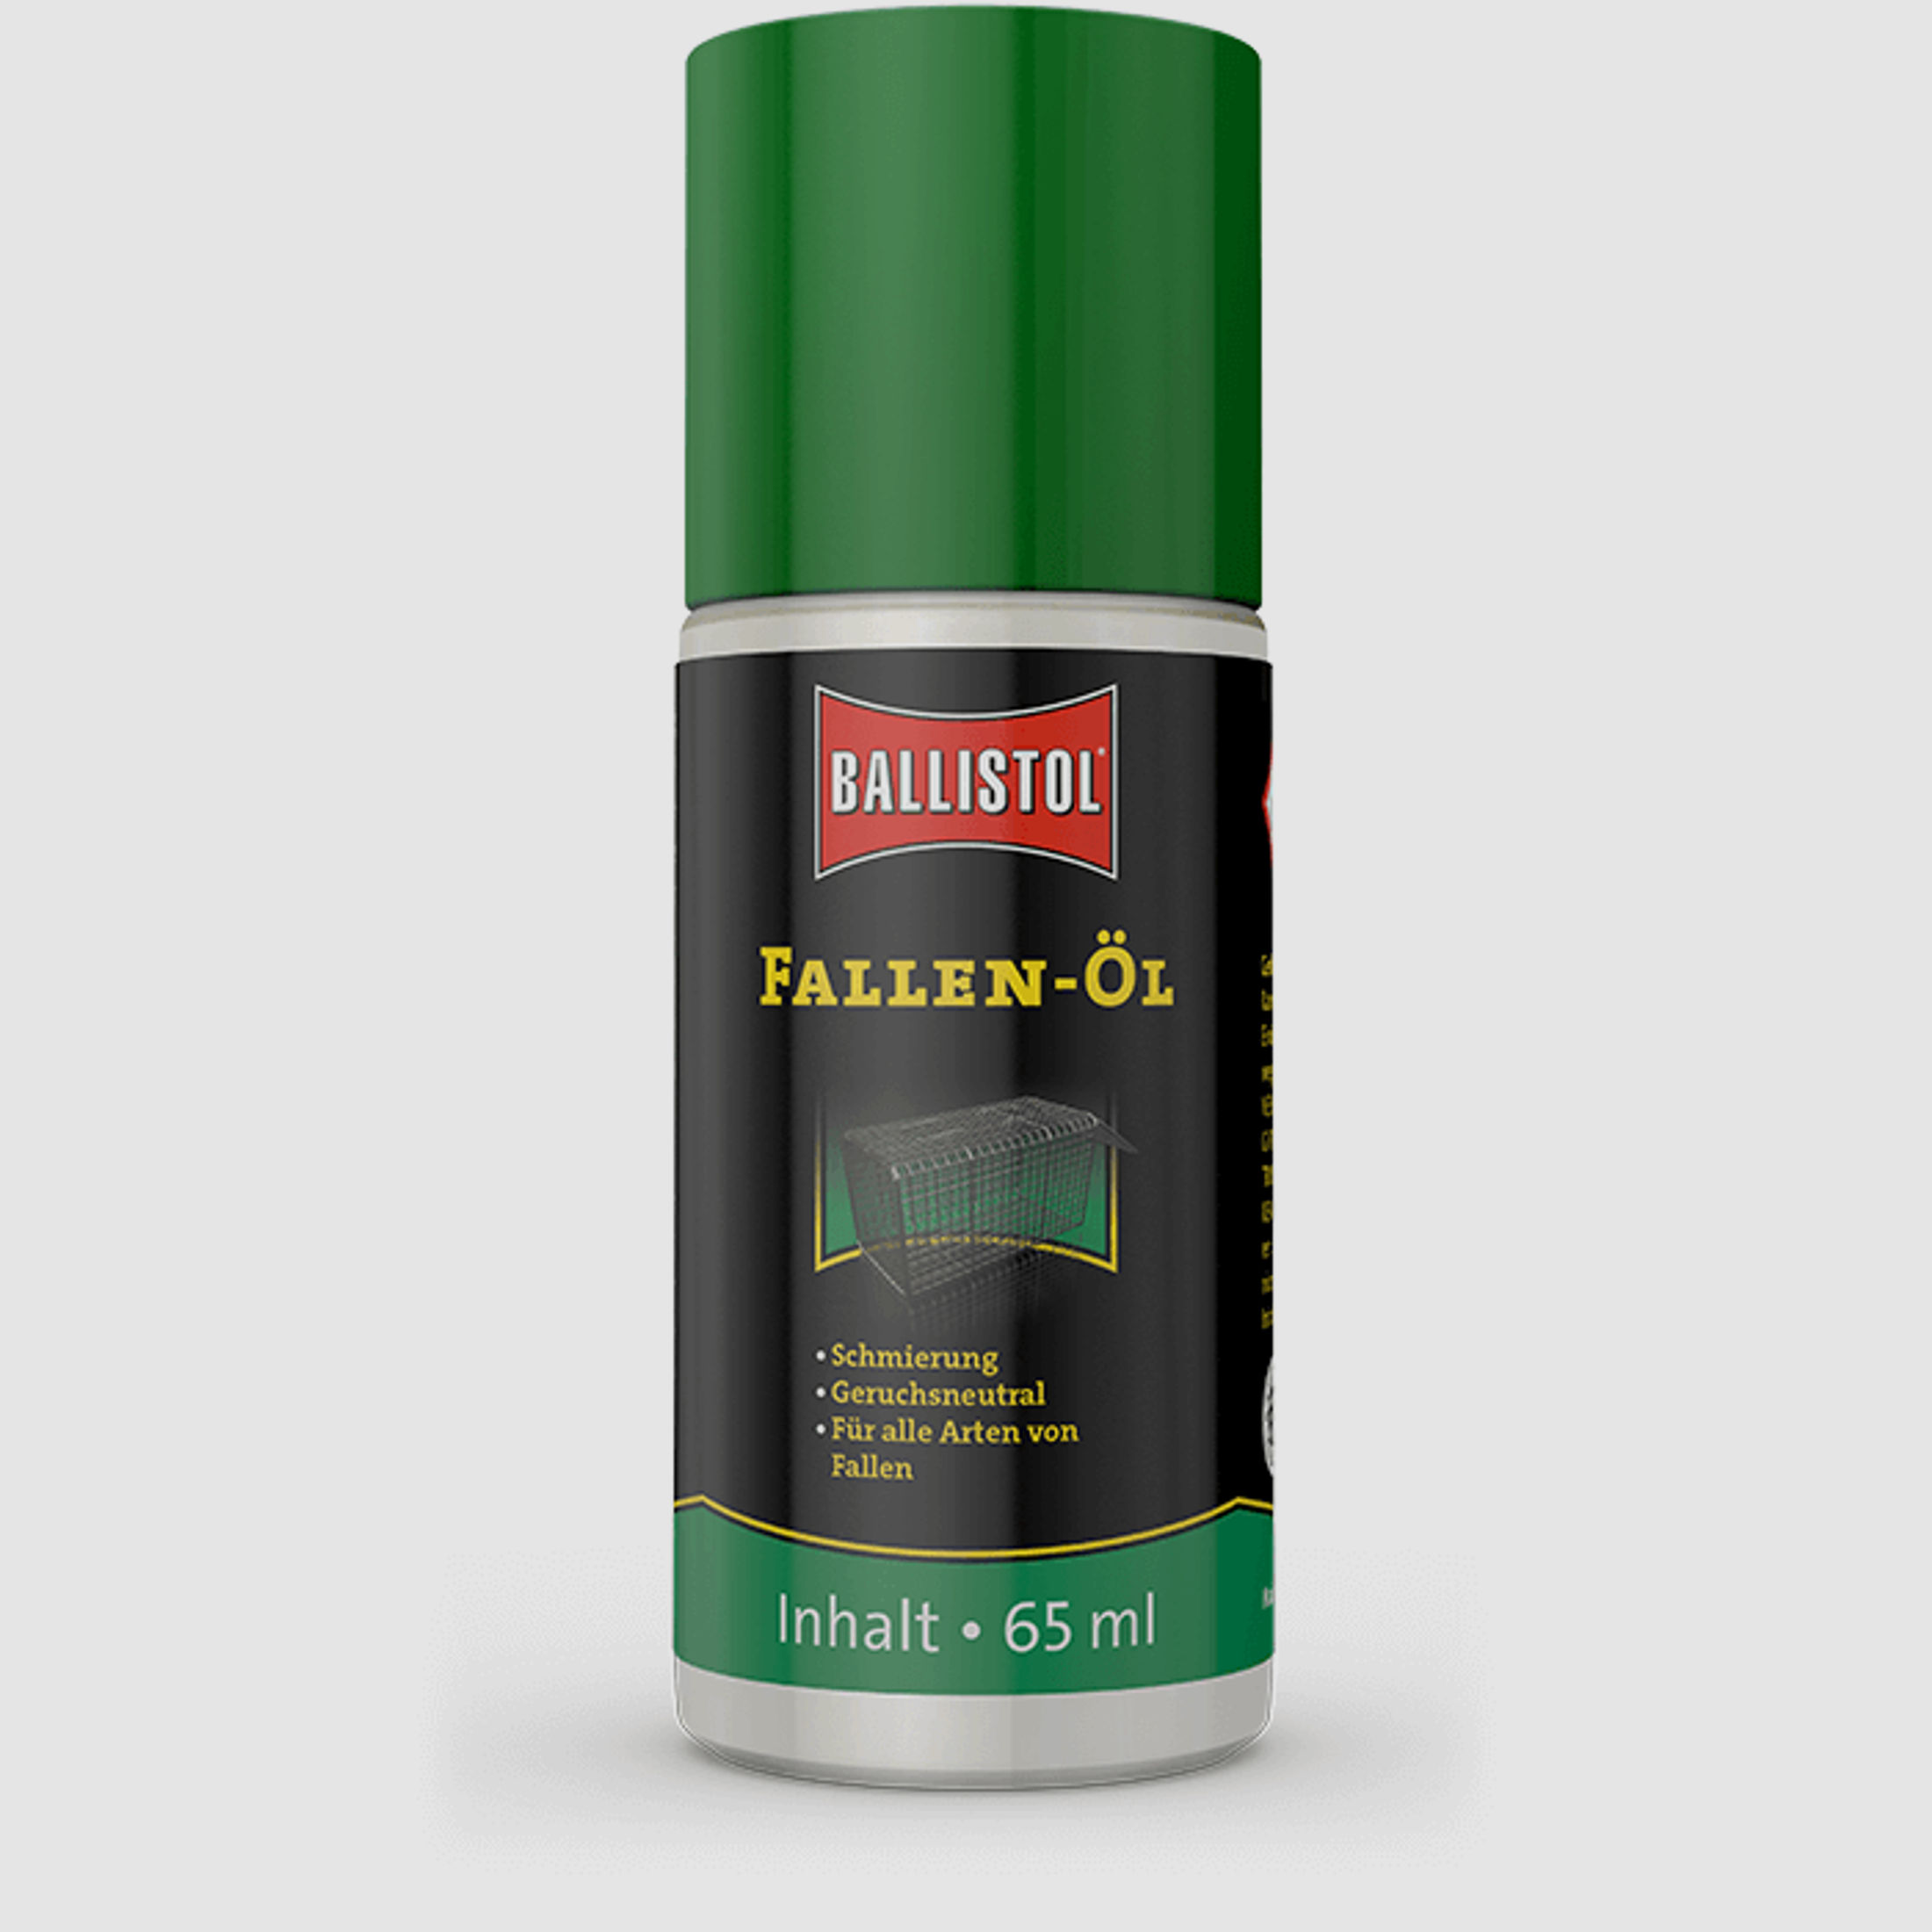 Ballistol Fallen-Öl